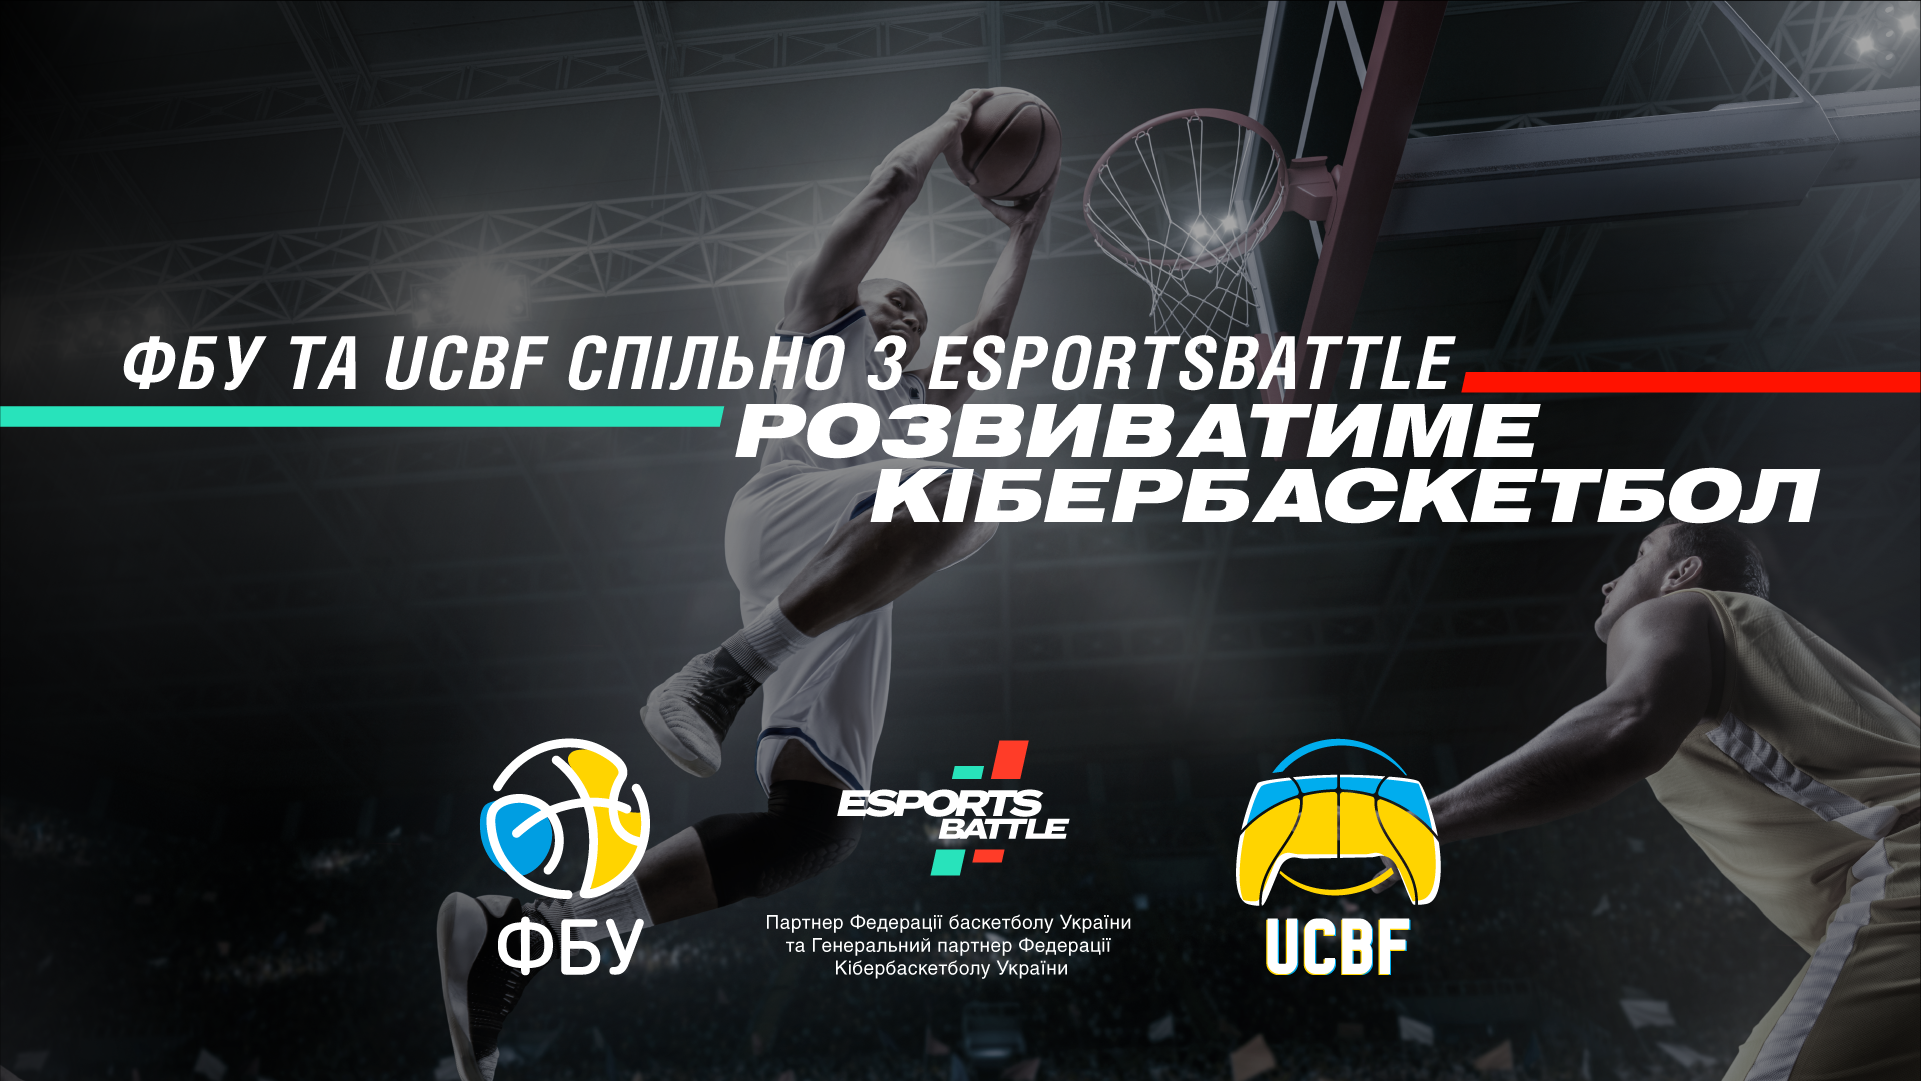 ESportsBattle стала партнером Федерації Баскетболу України та генеральним партнером Федерації Кібербаскетболу України